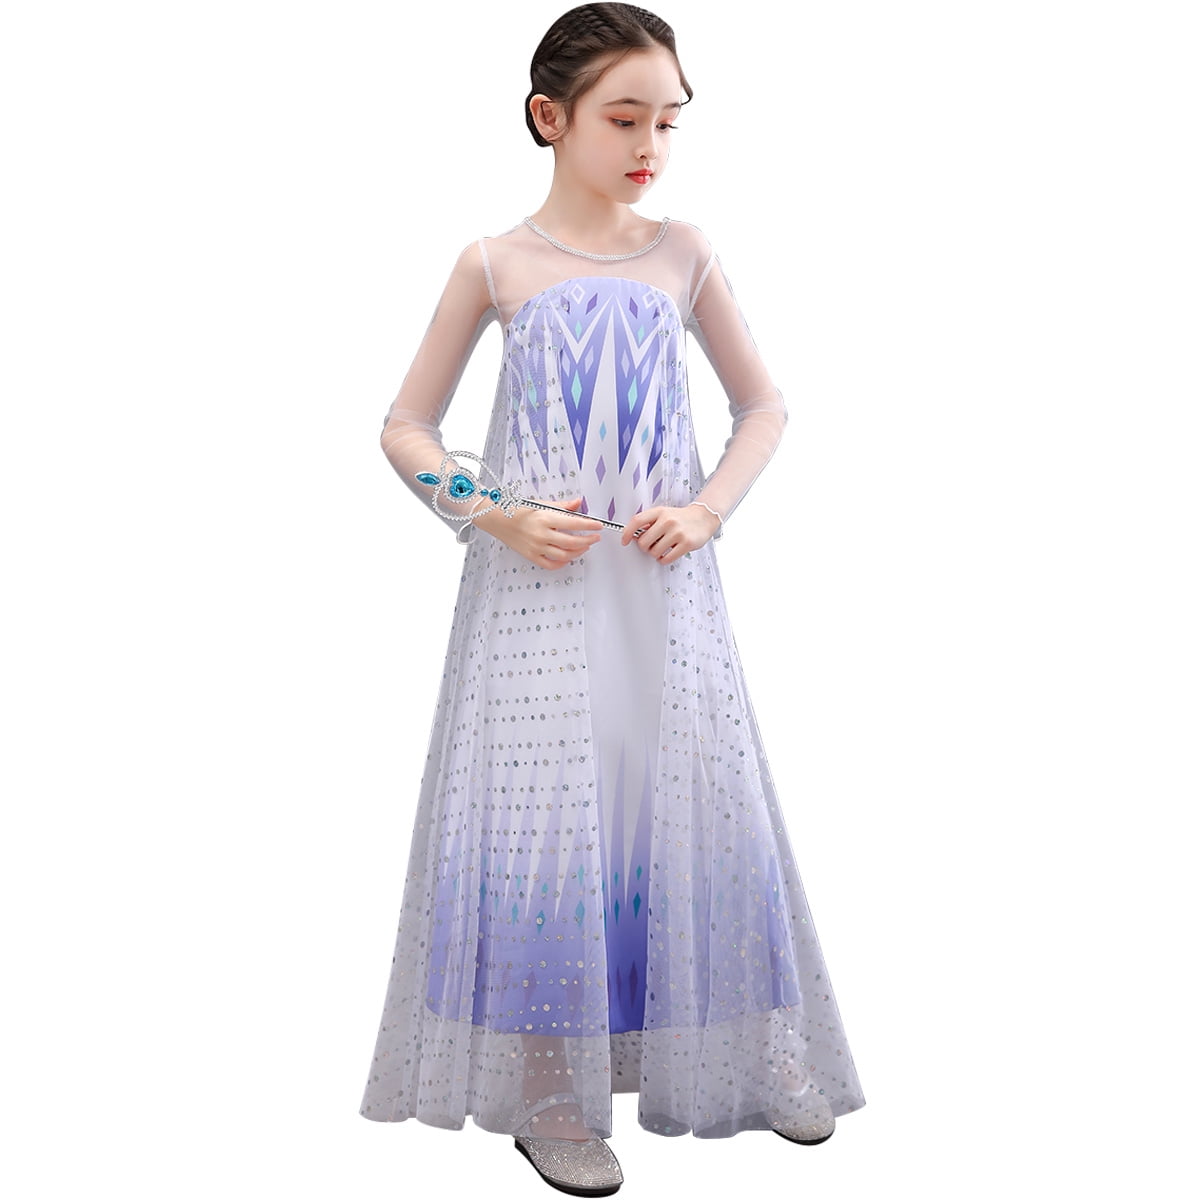 2020 Elsa Dresses For Girls Princess Anna Dress Elsa Costumes Party Cosplay Kids 